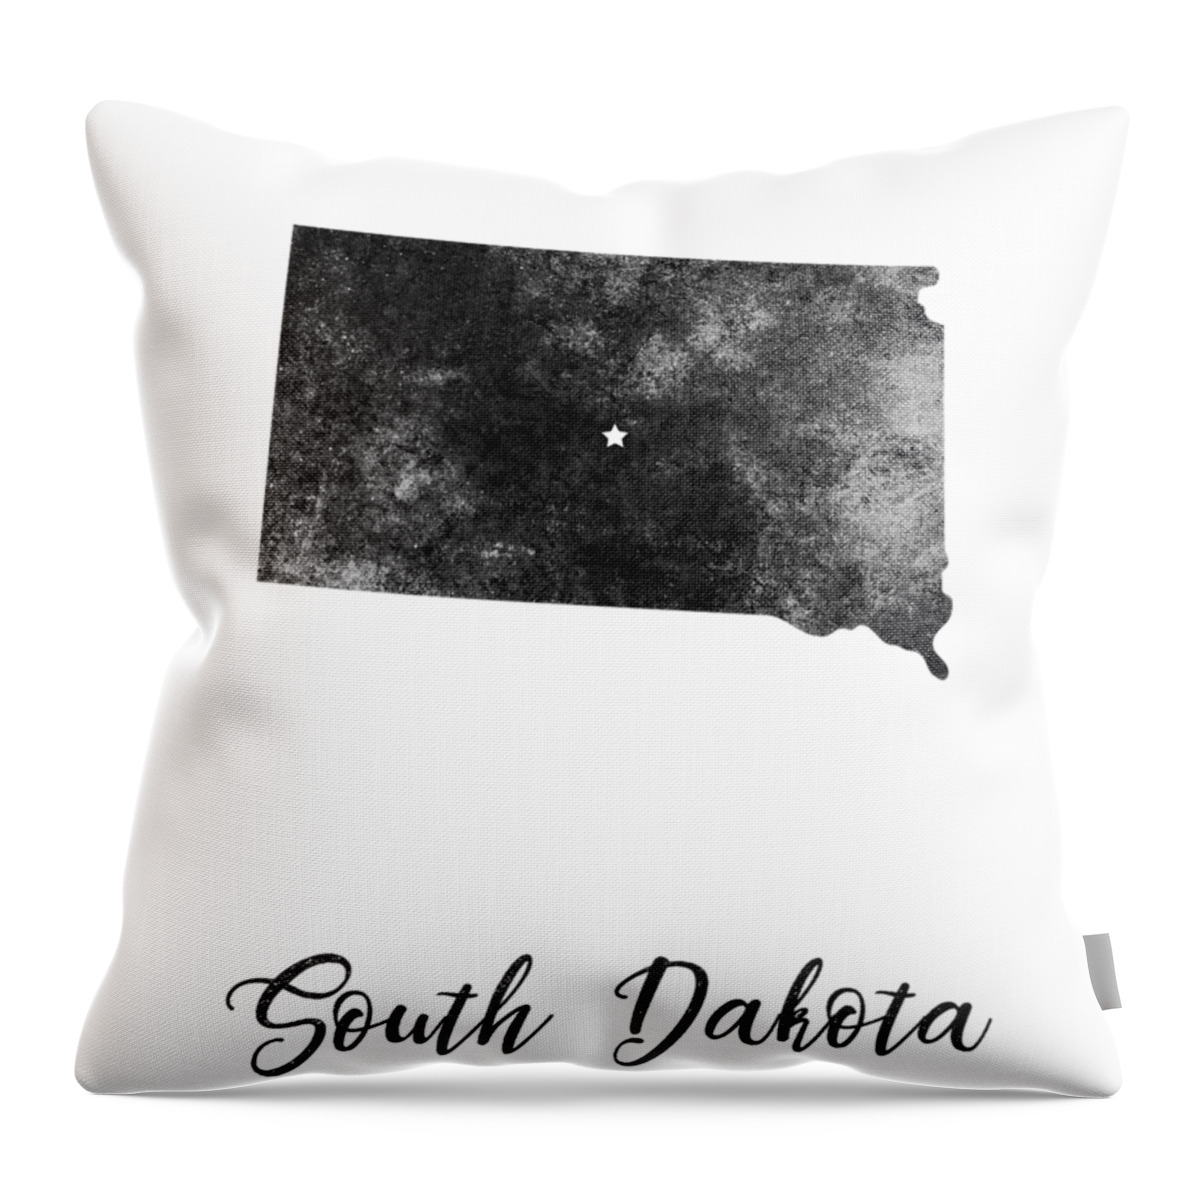 South Dakota Throw Pillow featuring the mixed media South Dakota State Map Art - Grunge Silhouette by Studio Grafiikka